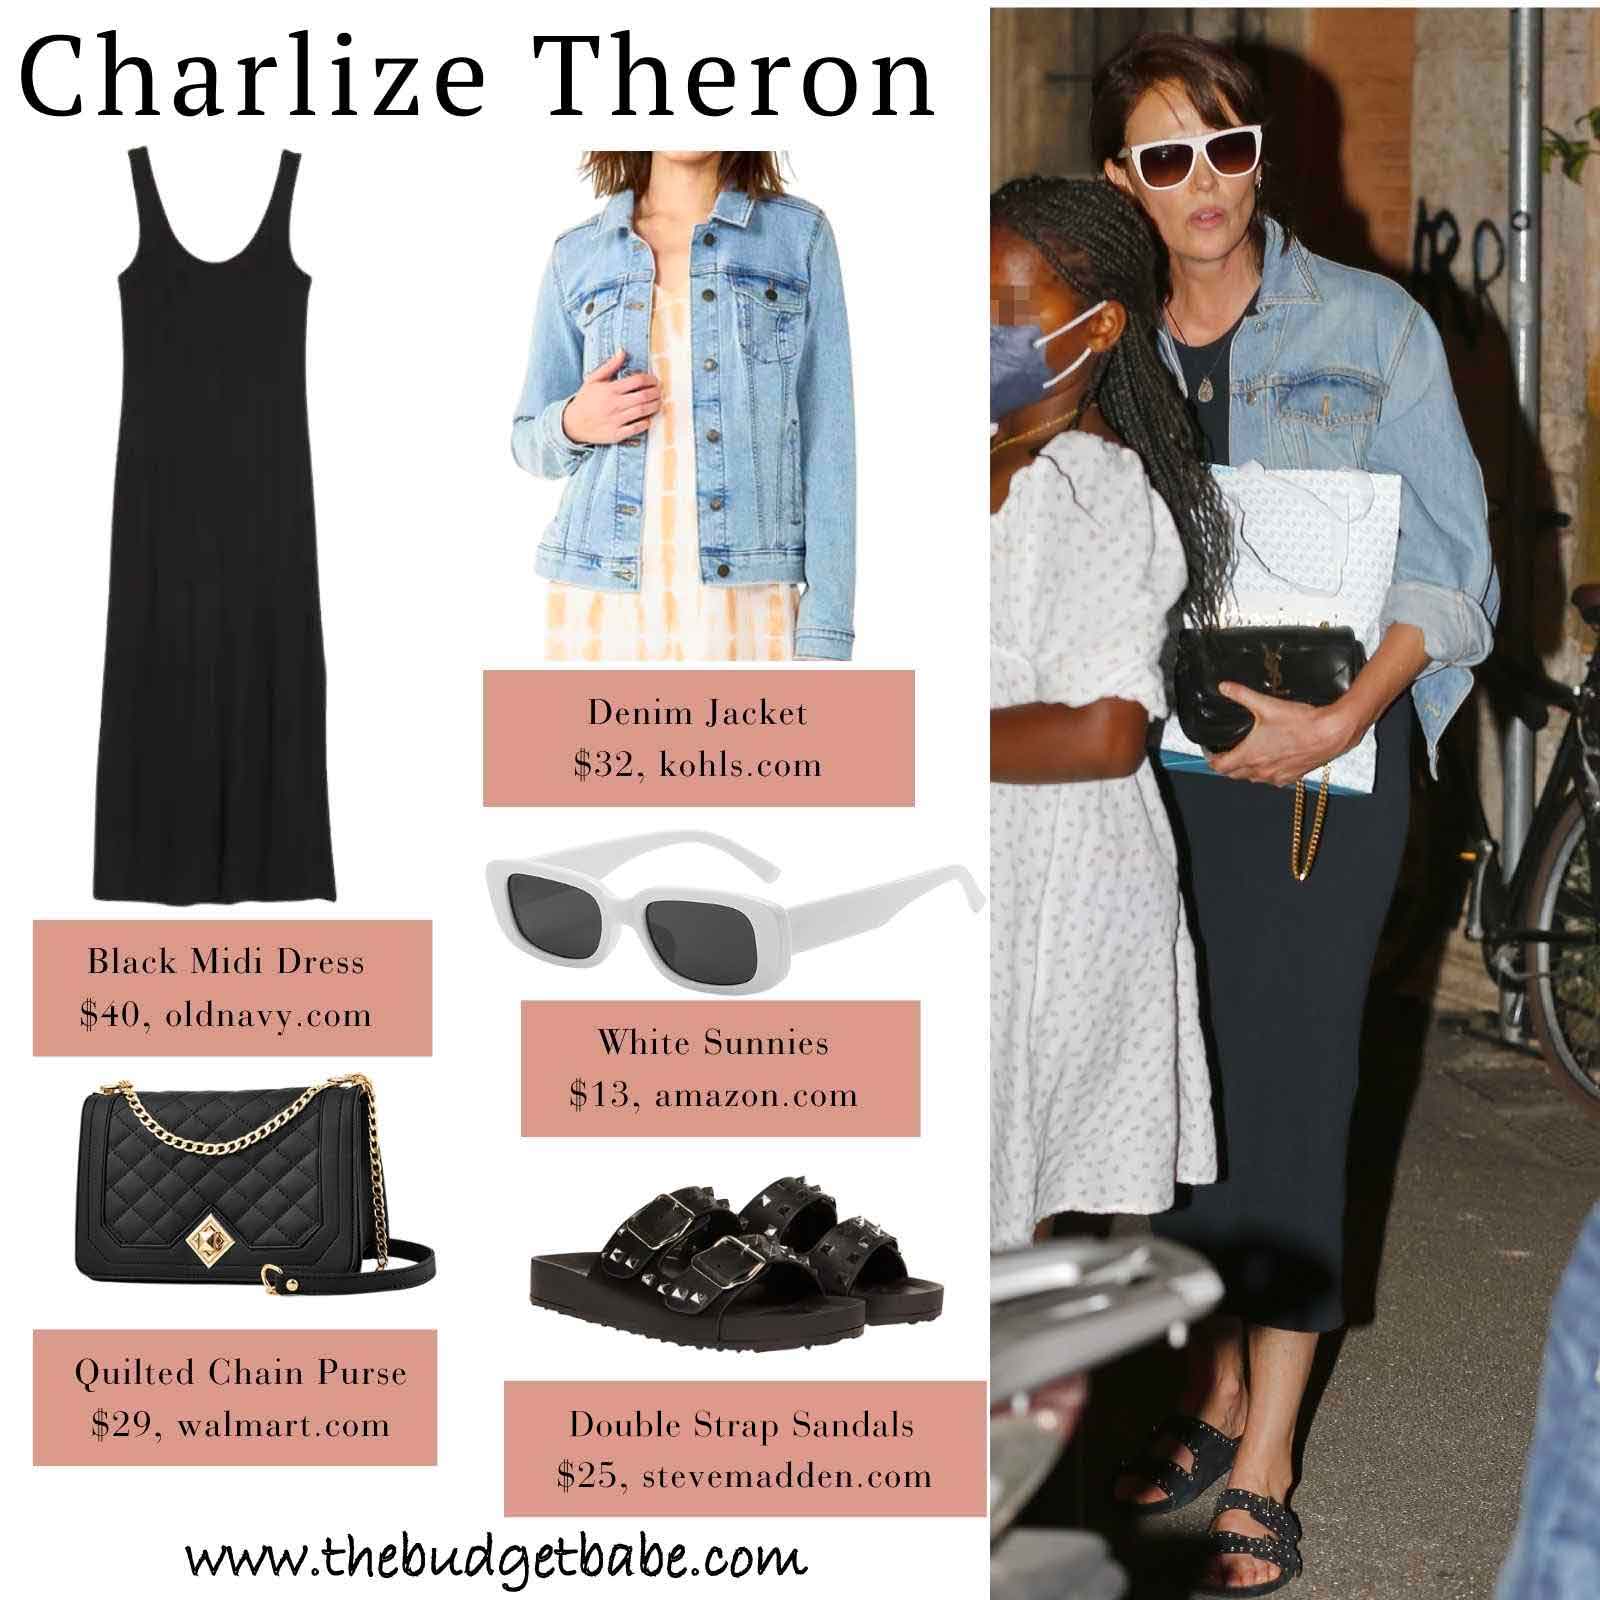 Charlize Theron black maxi dress and denim jacket look